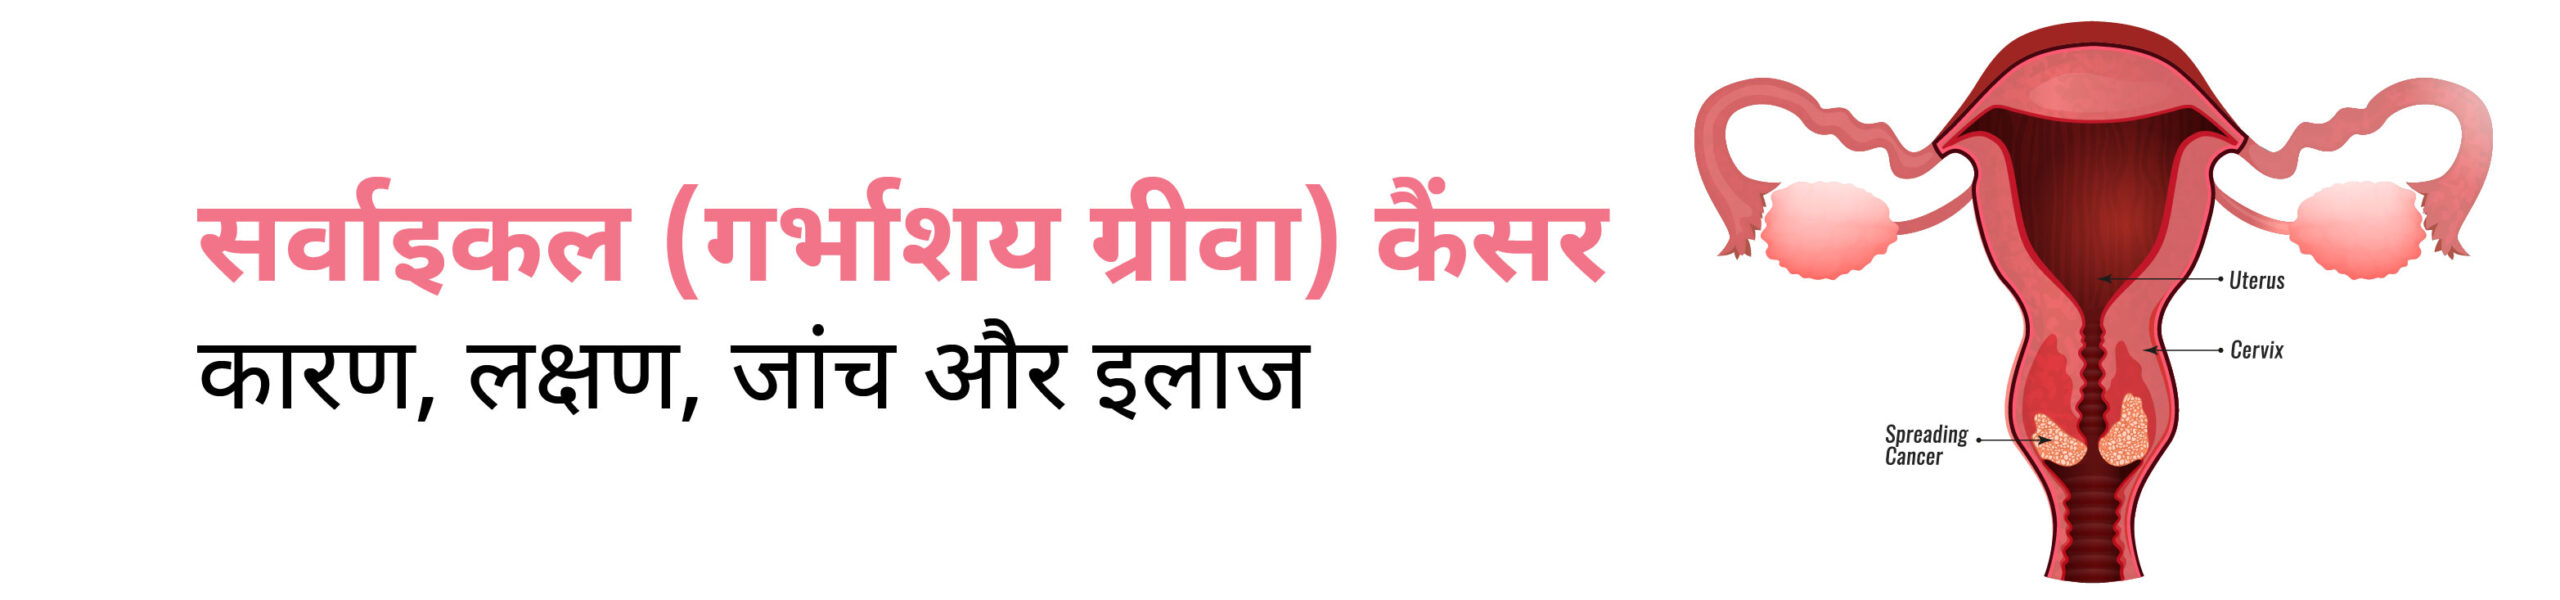 सर्वाइकल (गर्भाशय ग्रीवा) कैंसर- Cervical Cancer in Hindi